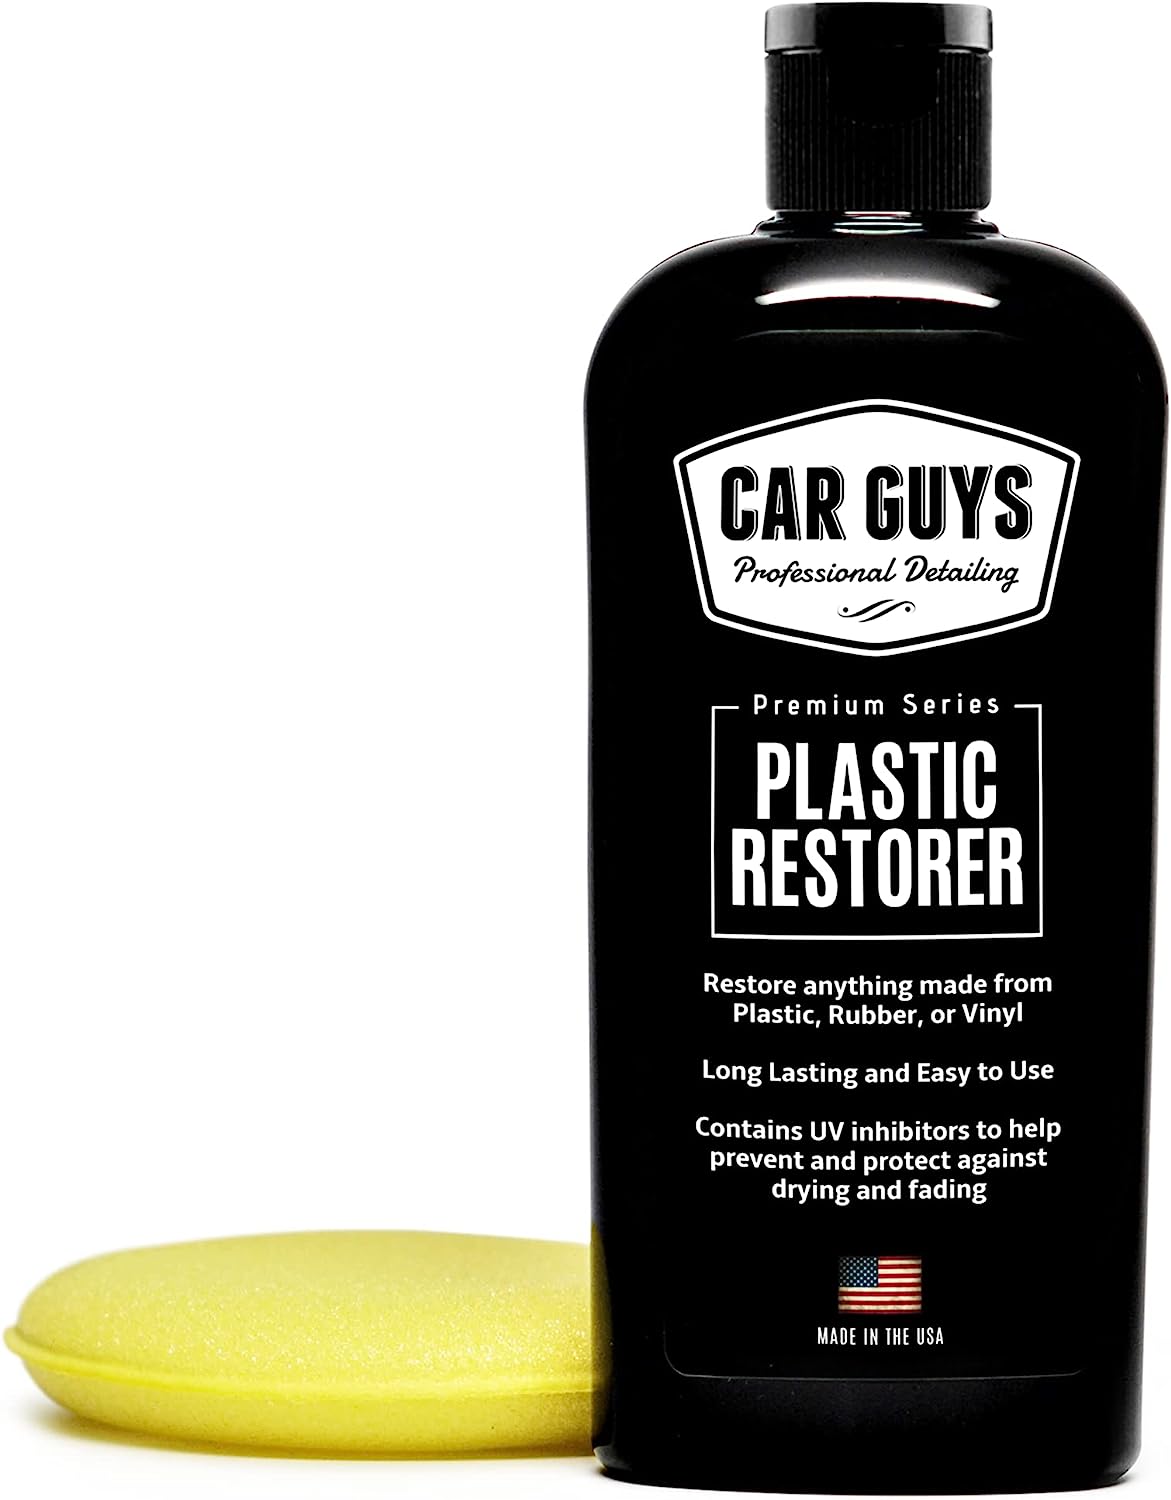 CAR GUYS Plastic Restorer | Bring Plastic, Rubber, and [...]